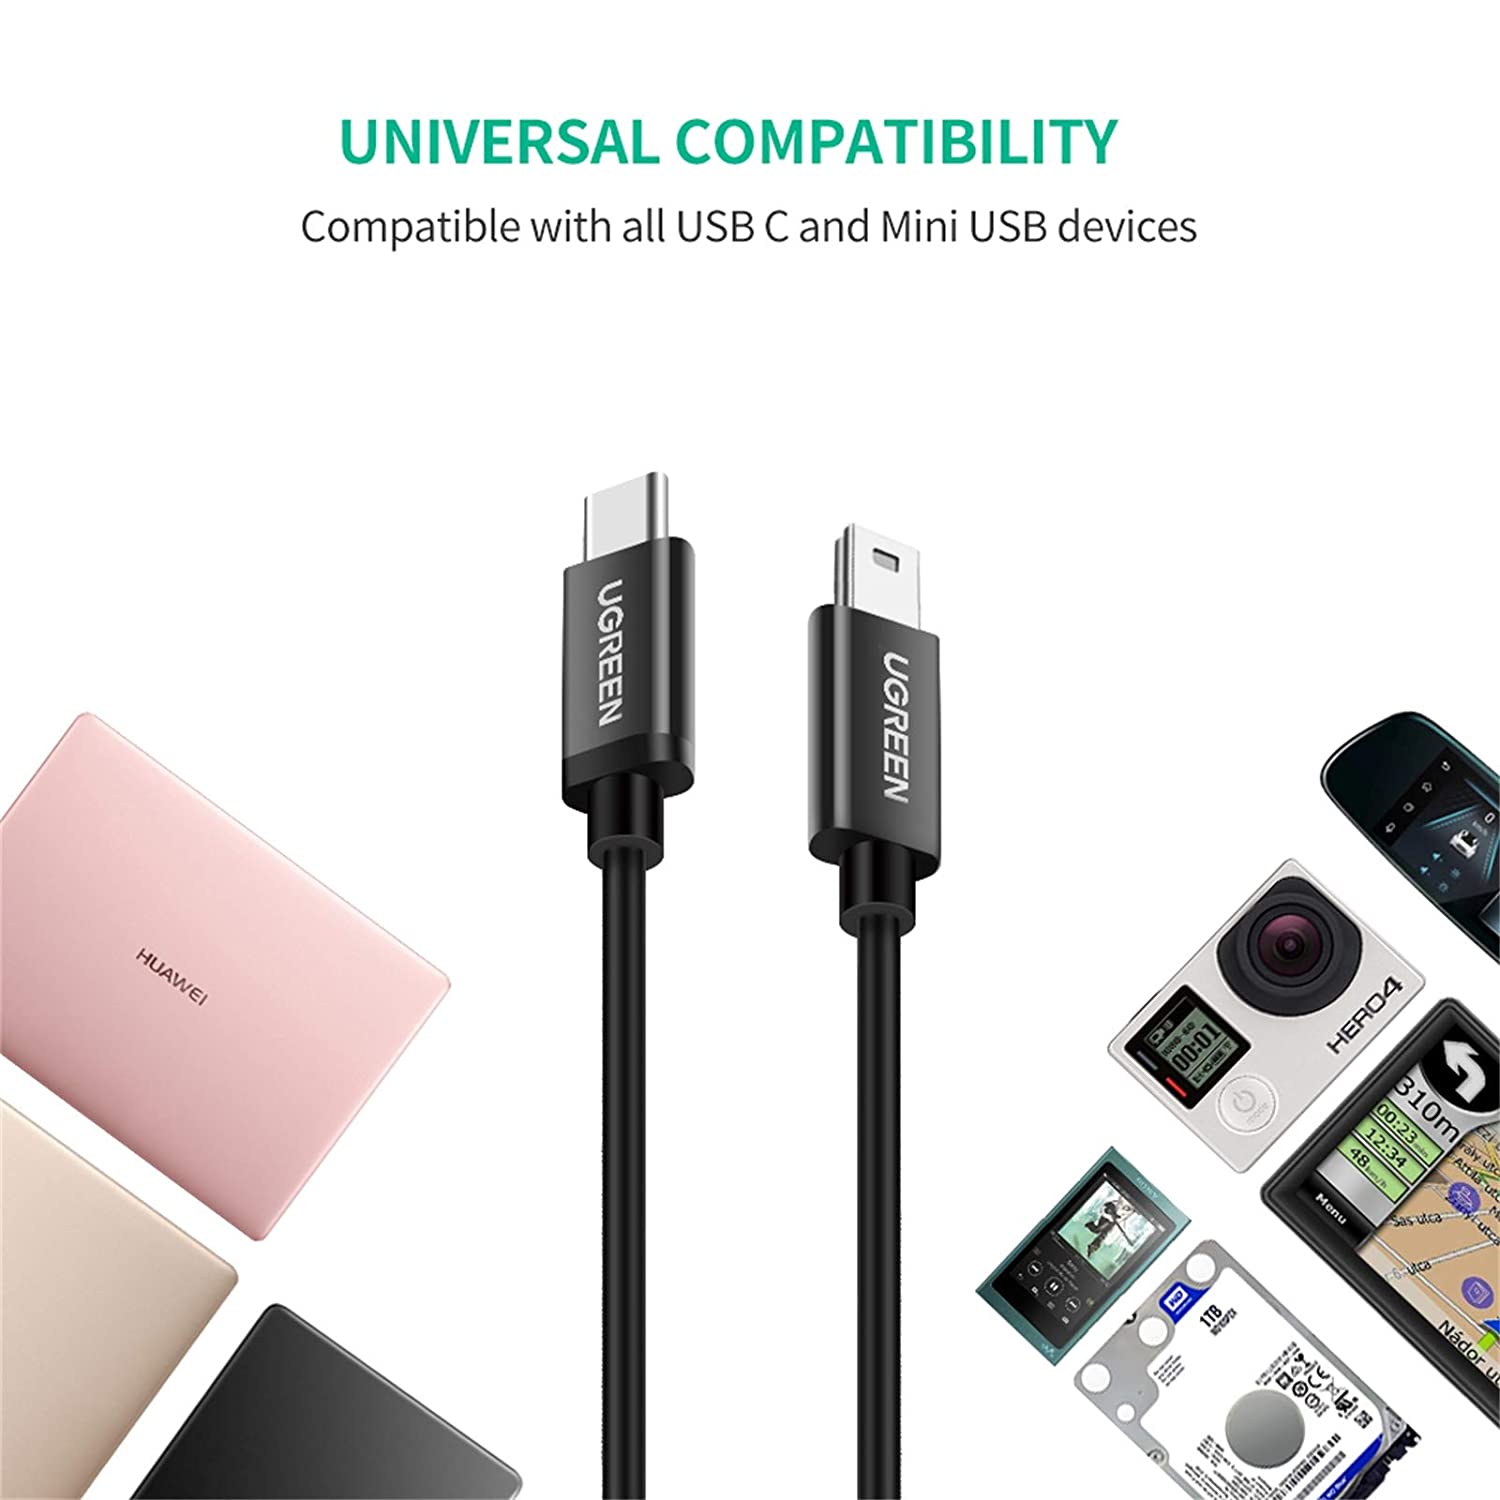 USB Adapters, USB C, Micro, Mini, & More